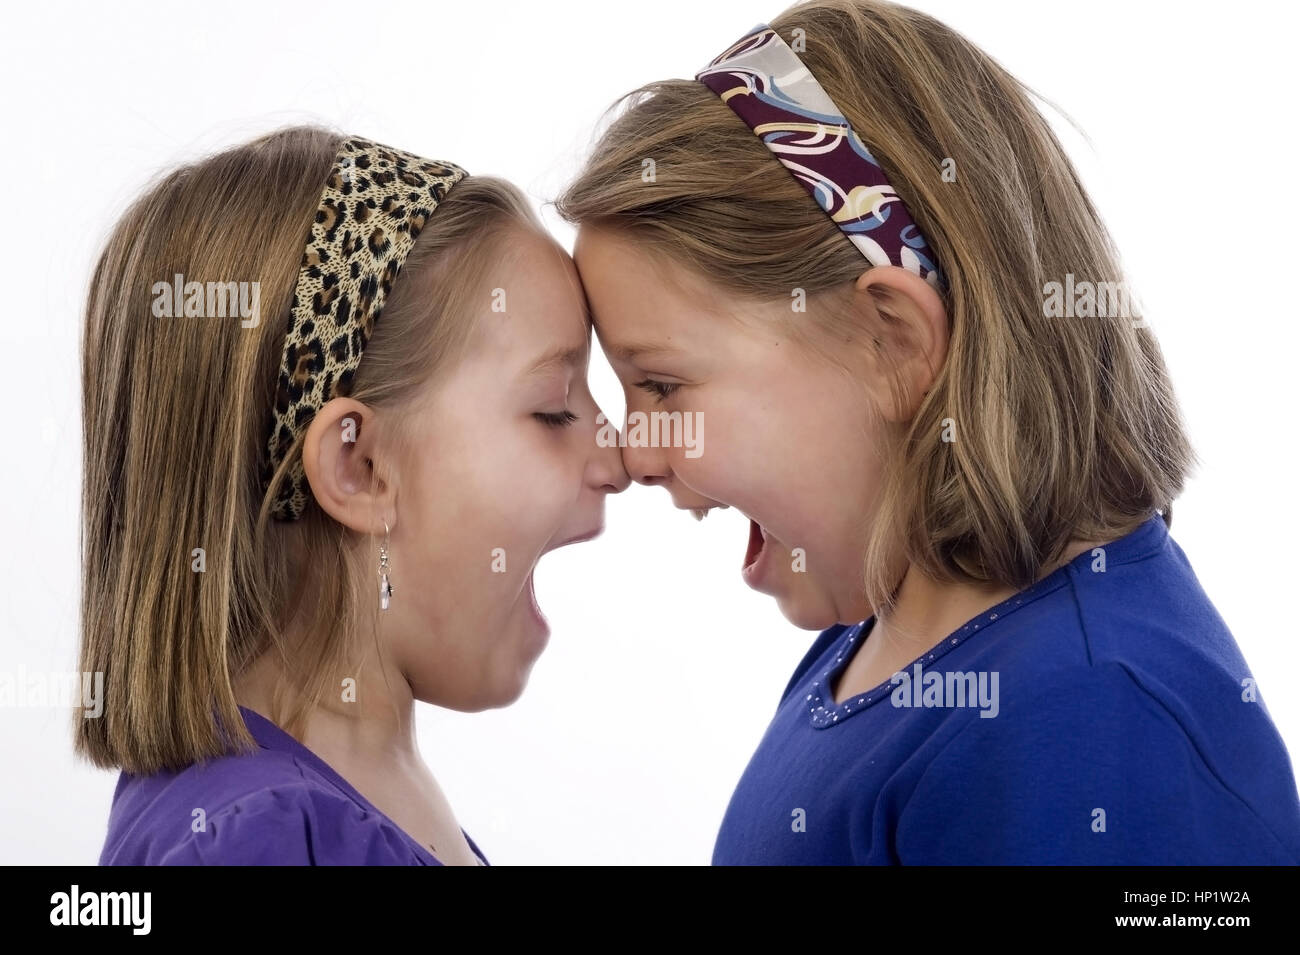 Model release , Zwei Maedchen schreien sich an - girls scream each other Stock Photo